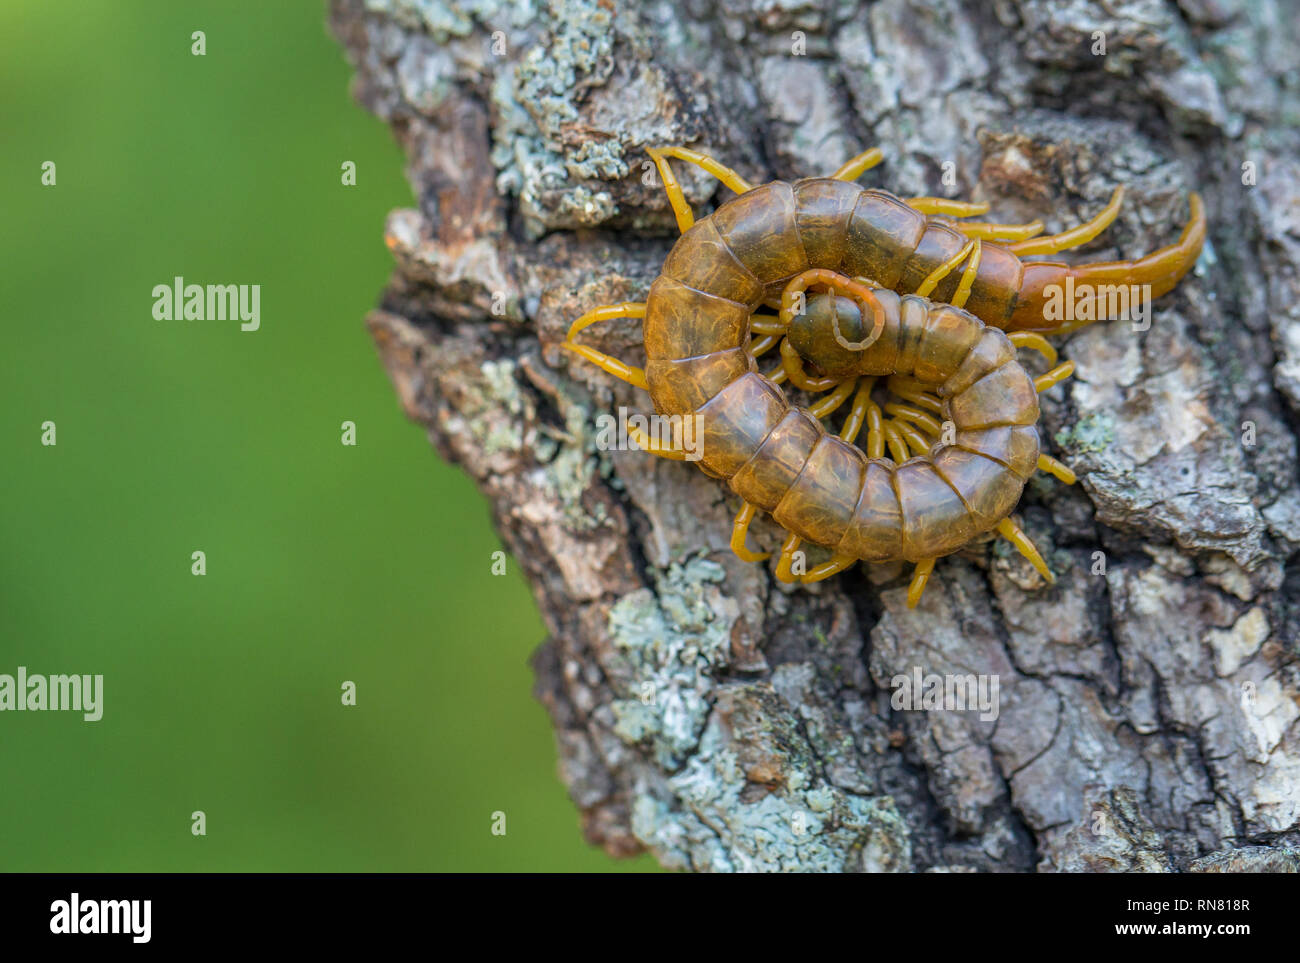 Close up view of the beautiful Megarian centipede Scolopendra cingulata Stock Photo